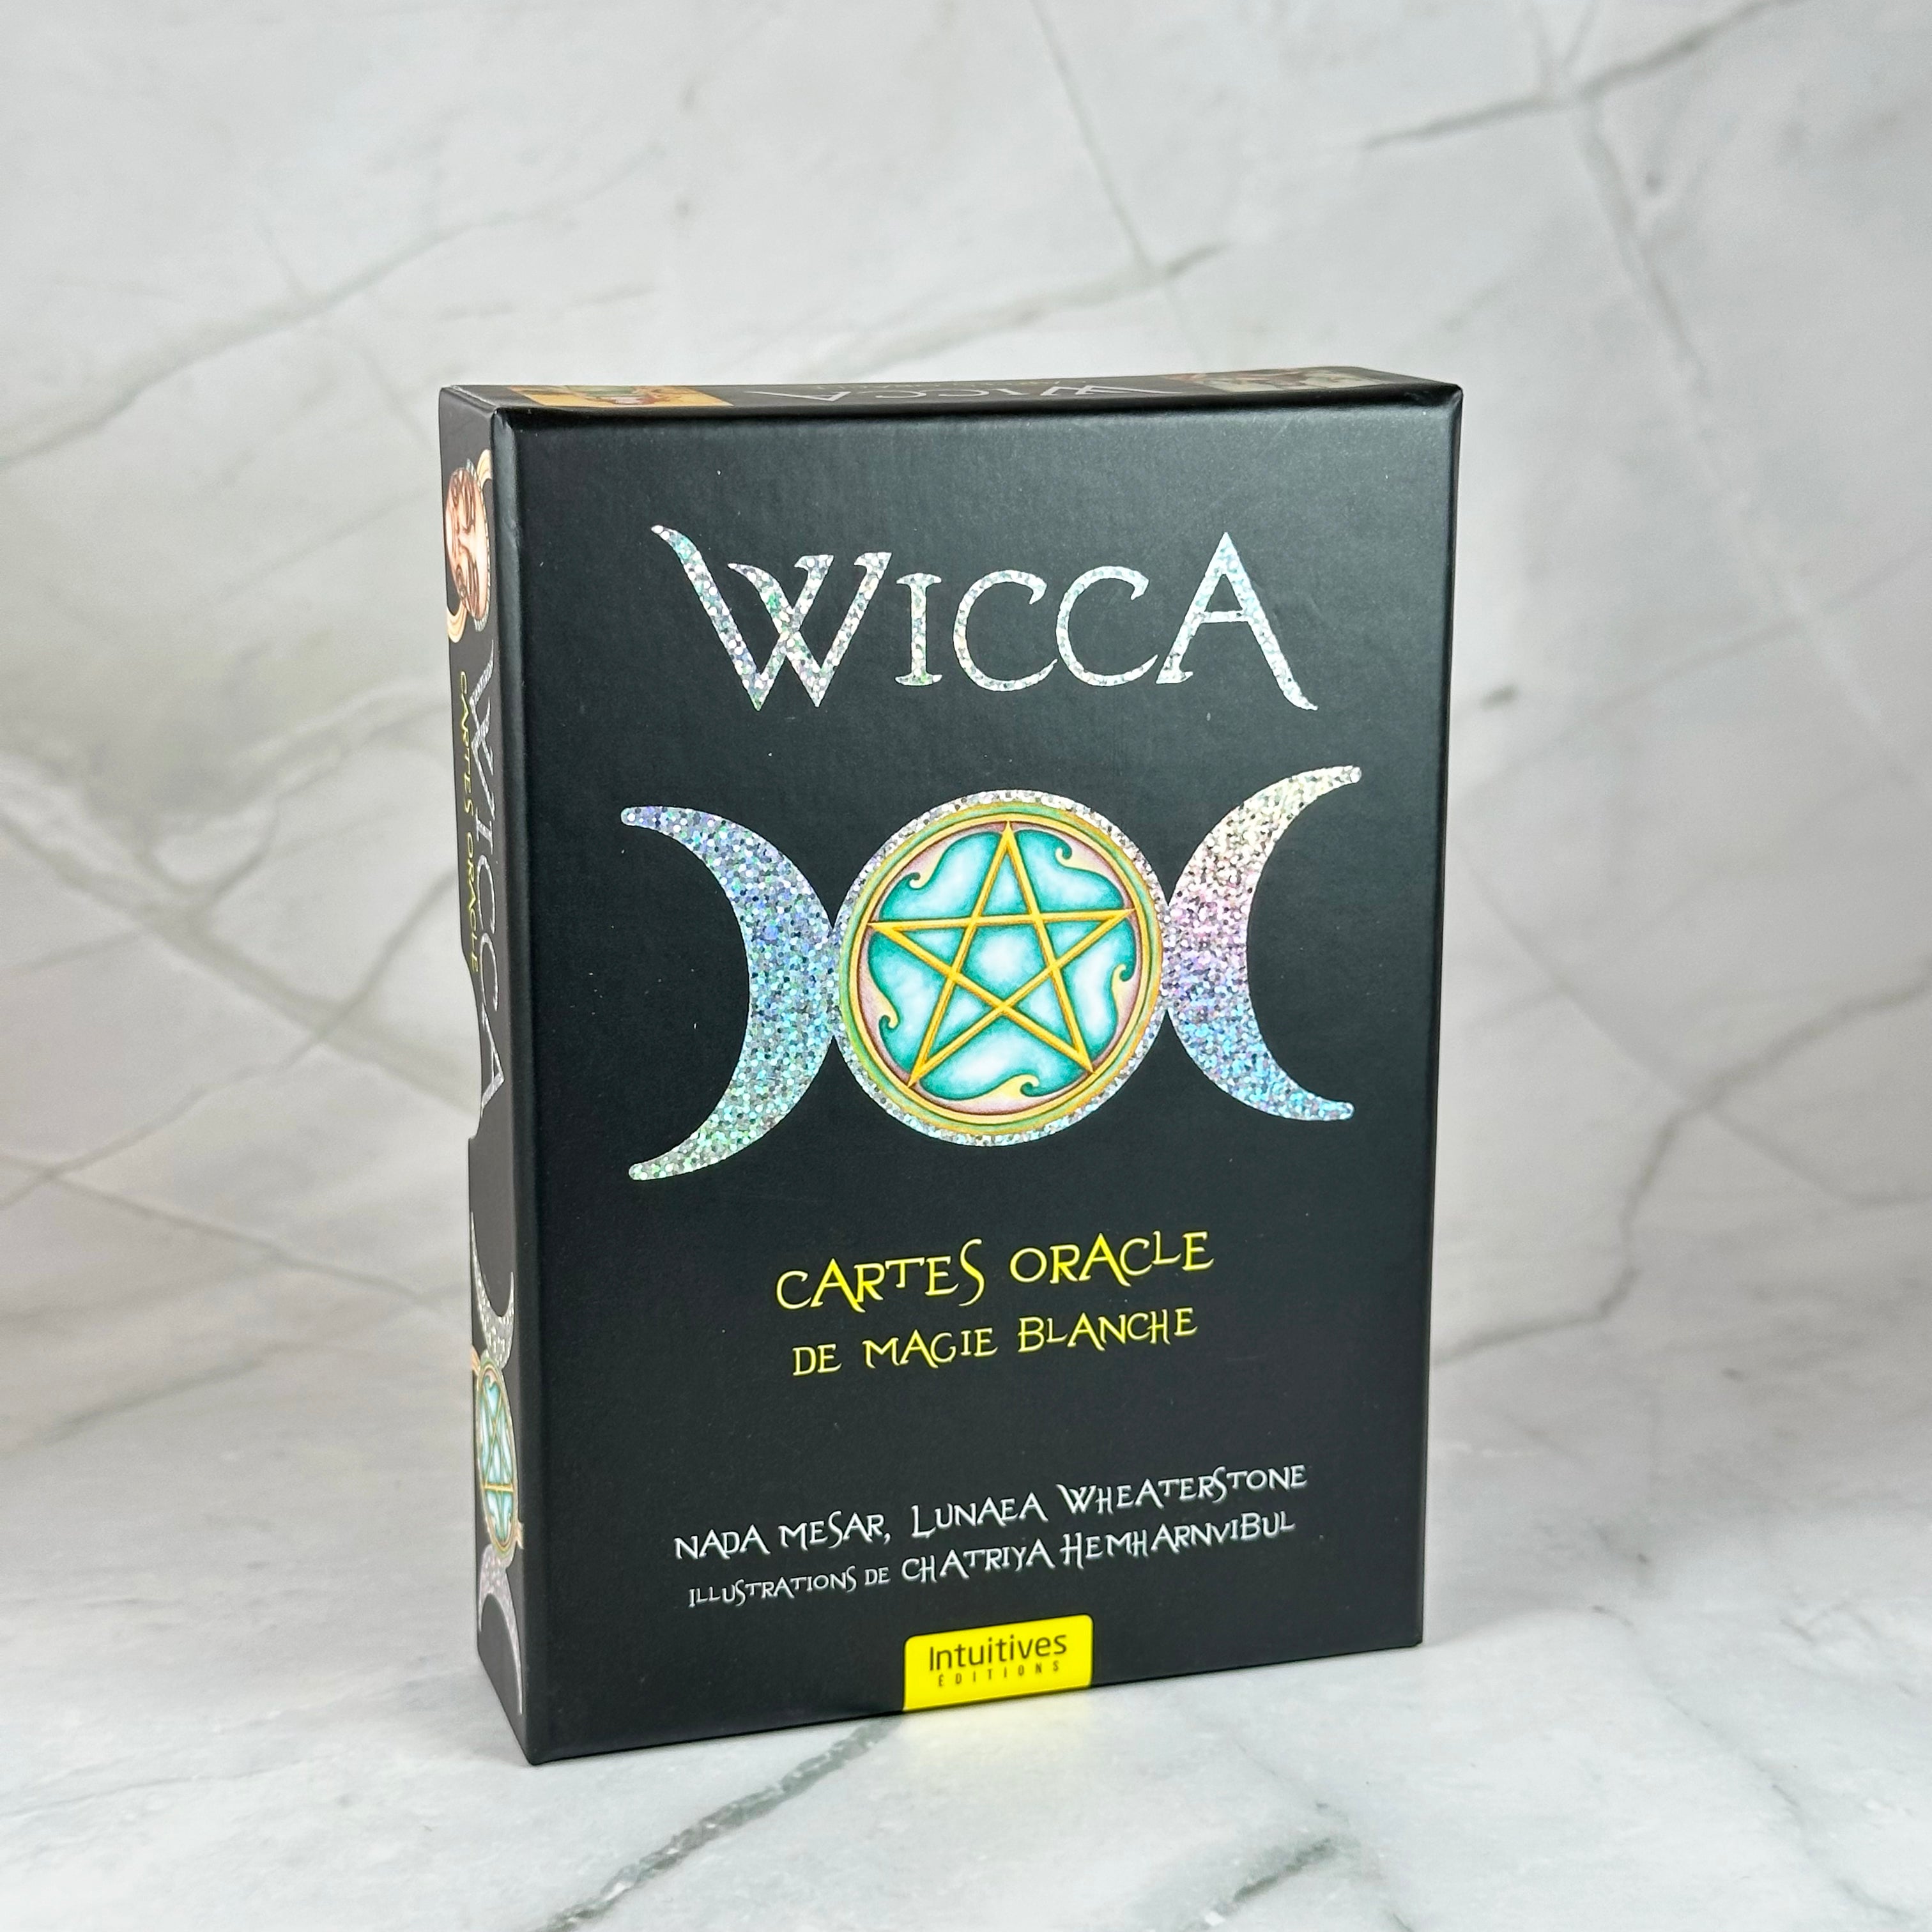 Wicca - Cartes Oracle de Magie Blanche